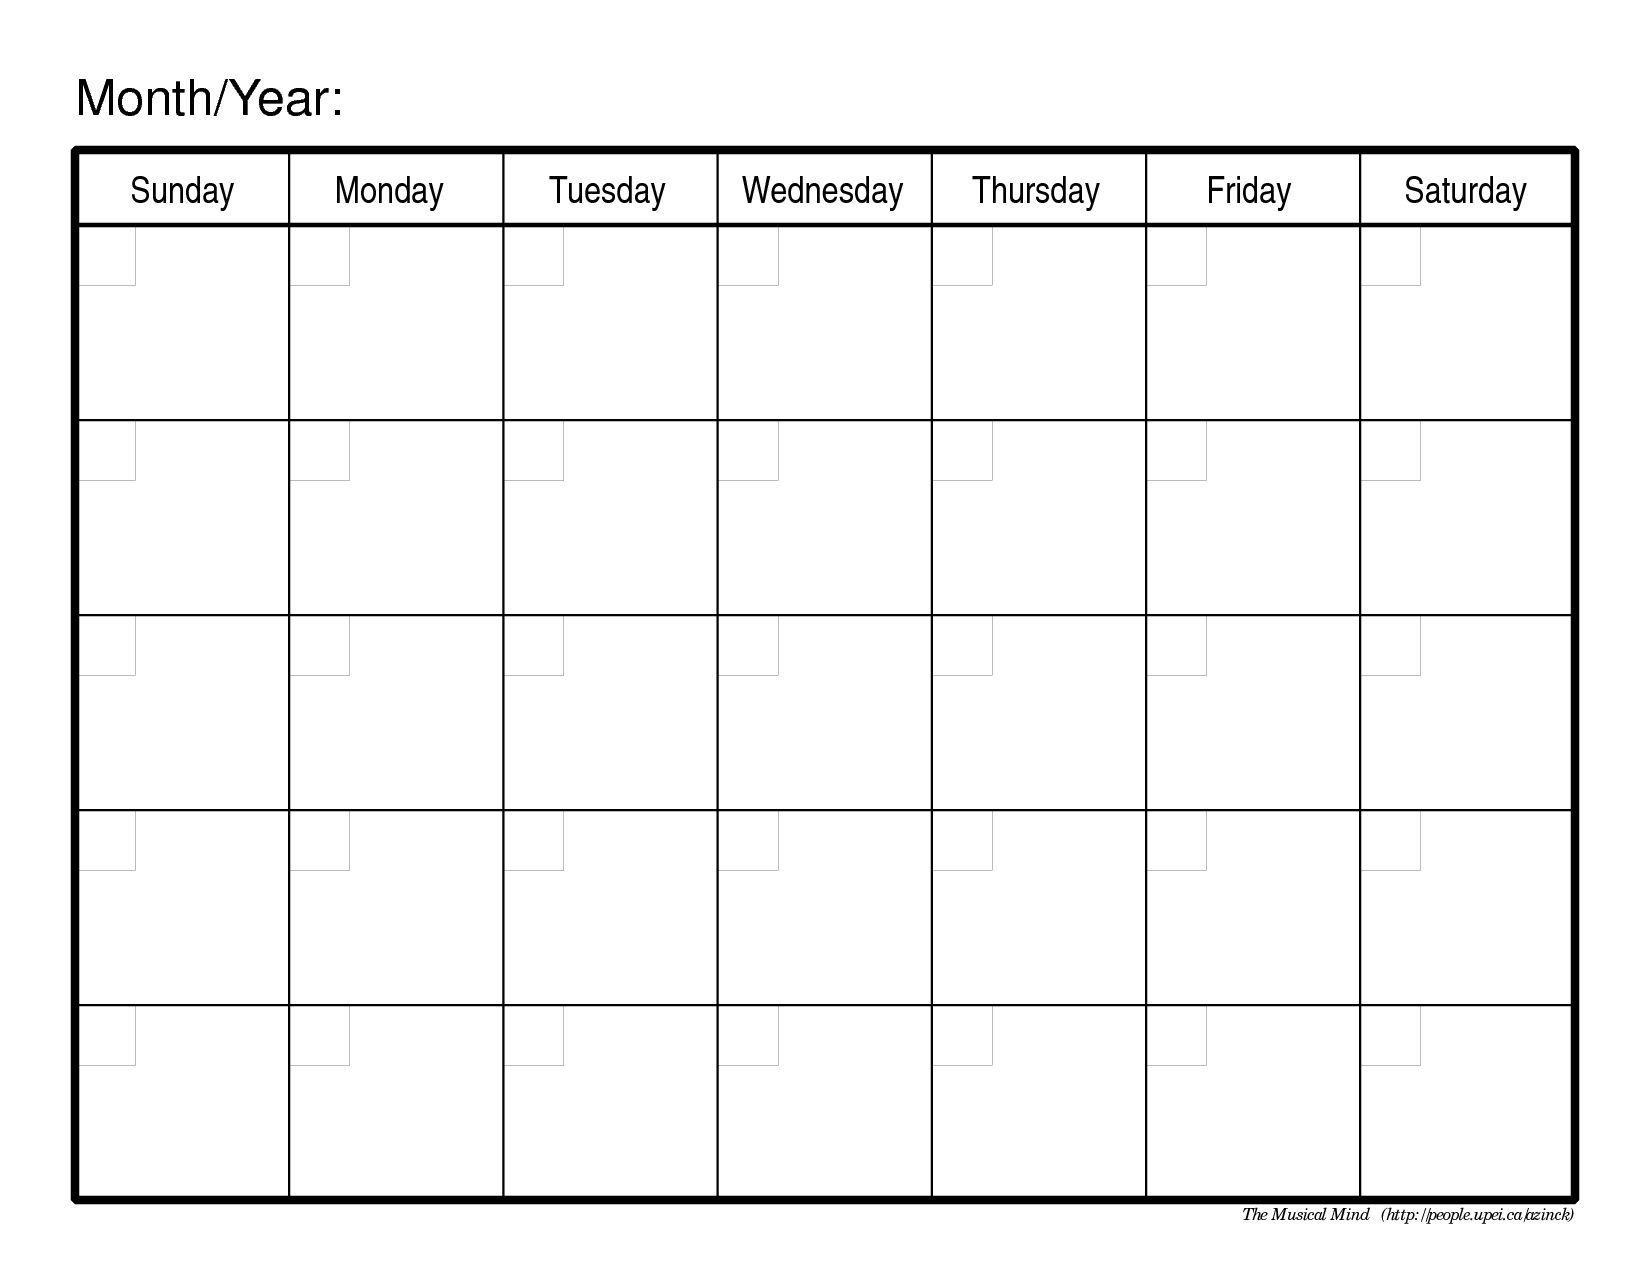 Monthly Calendar Template | Organizing | Monthly Calendar Template within Pictures Of Blank Monthly Calendars